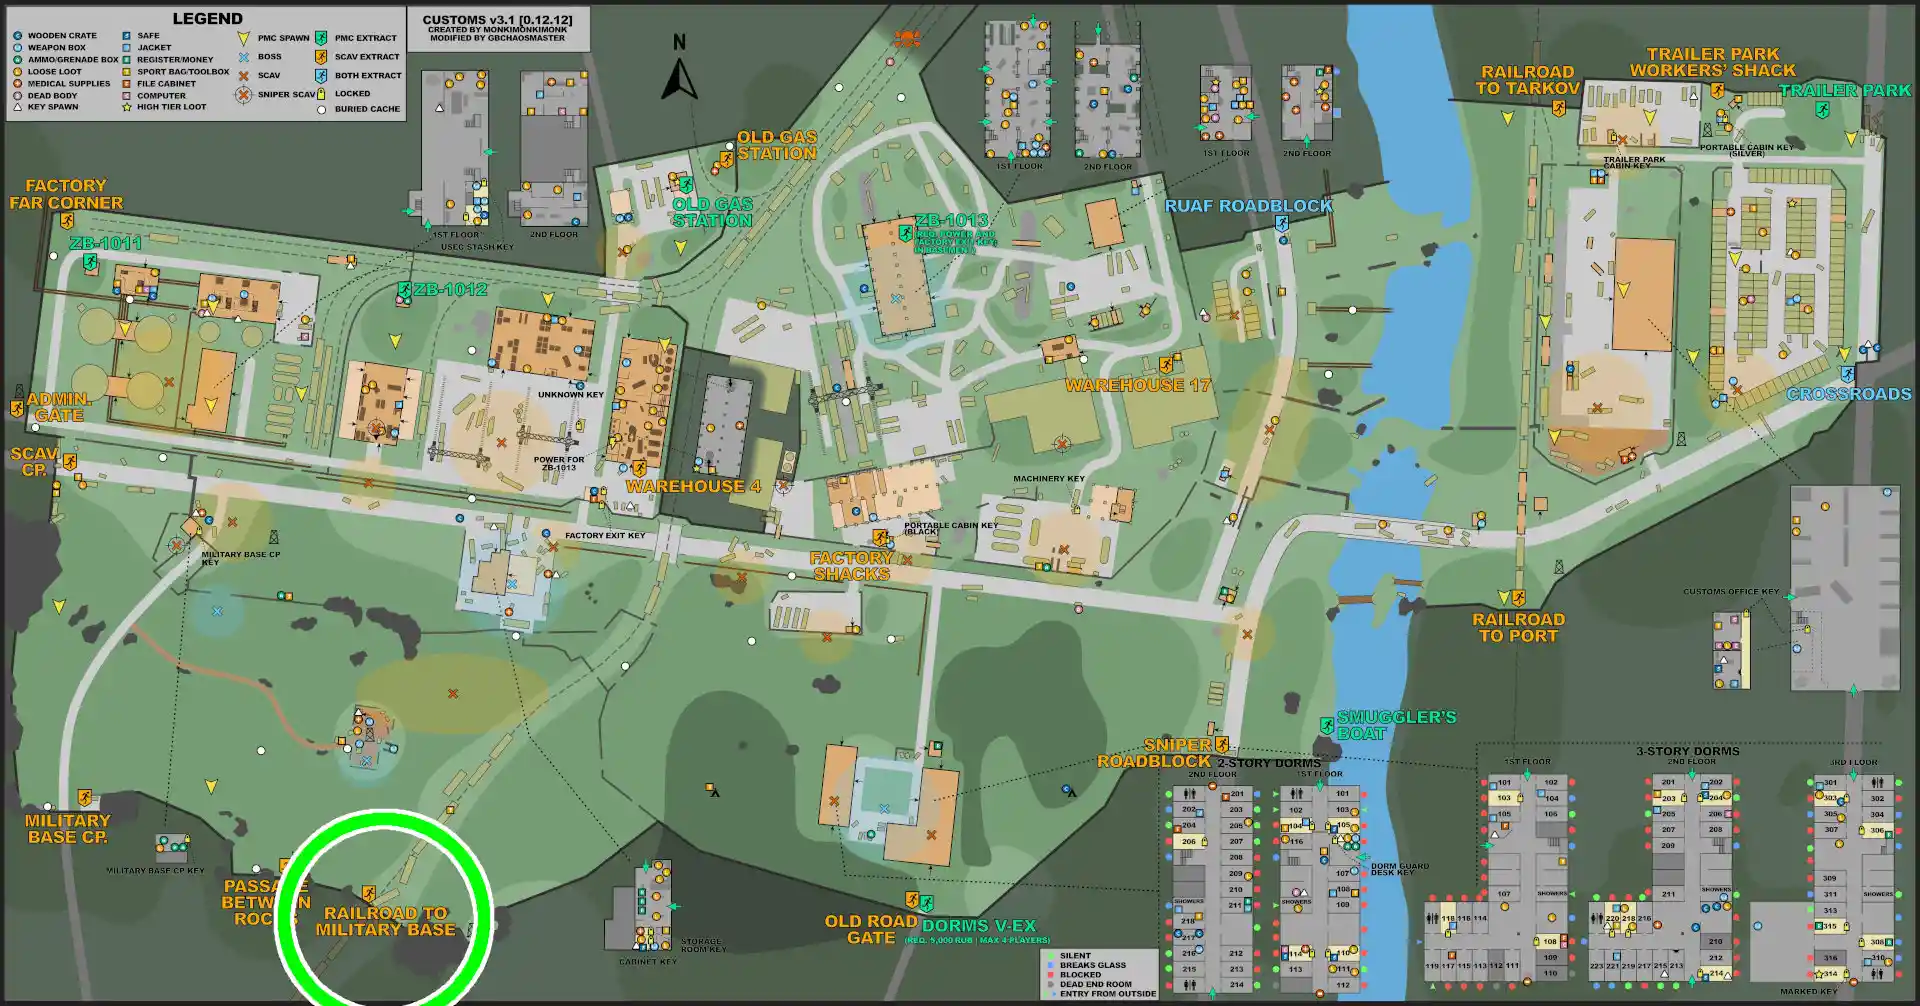 CUSTOMS-ESC-Railroad_to_Military_Base-MAP.jpg